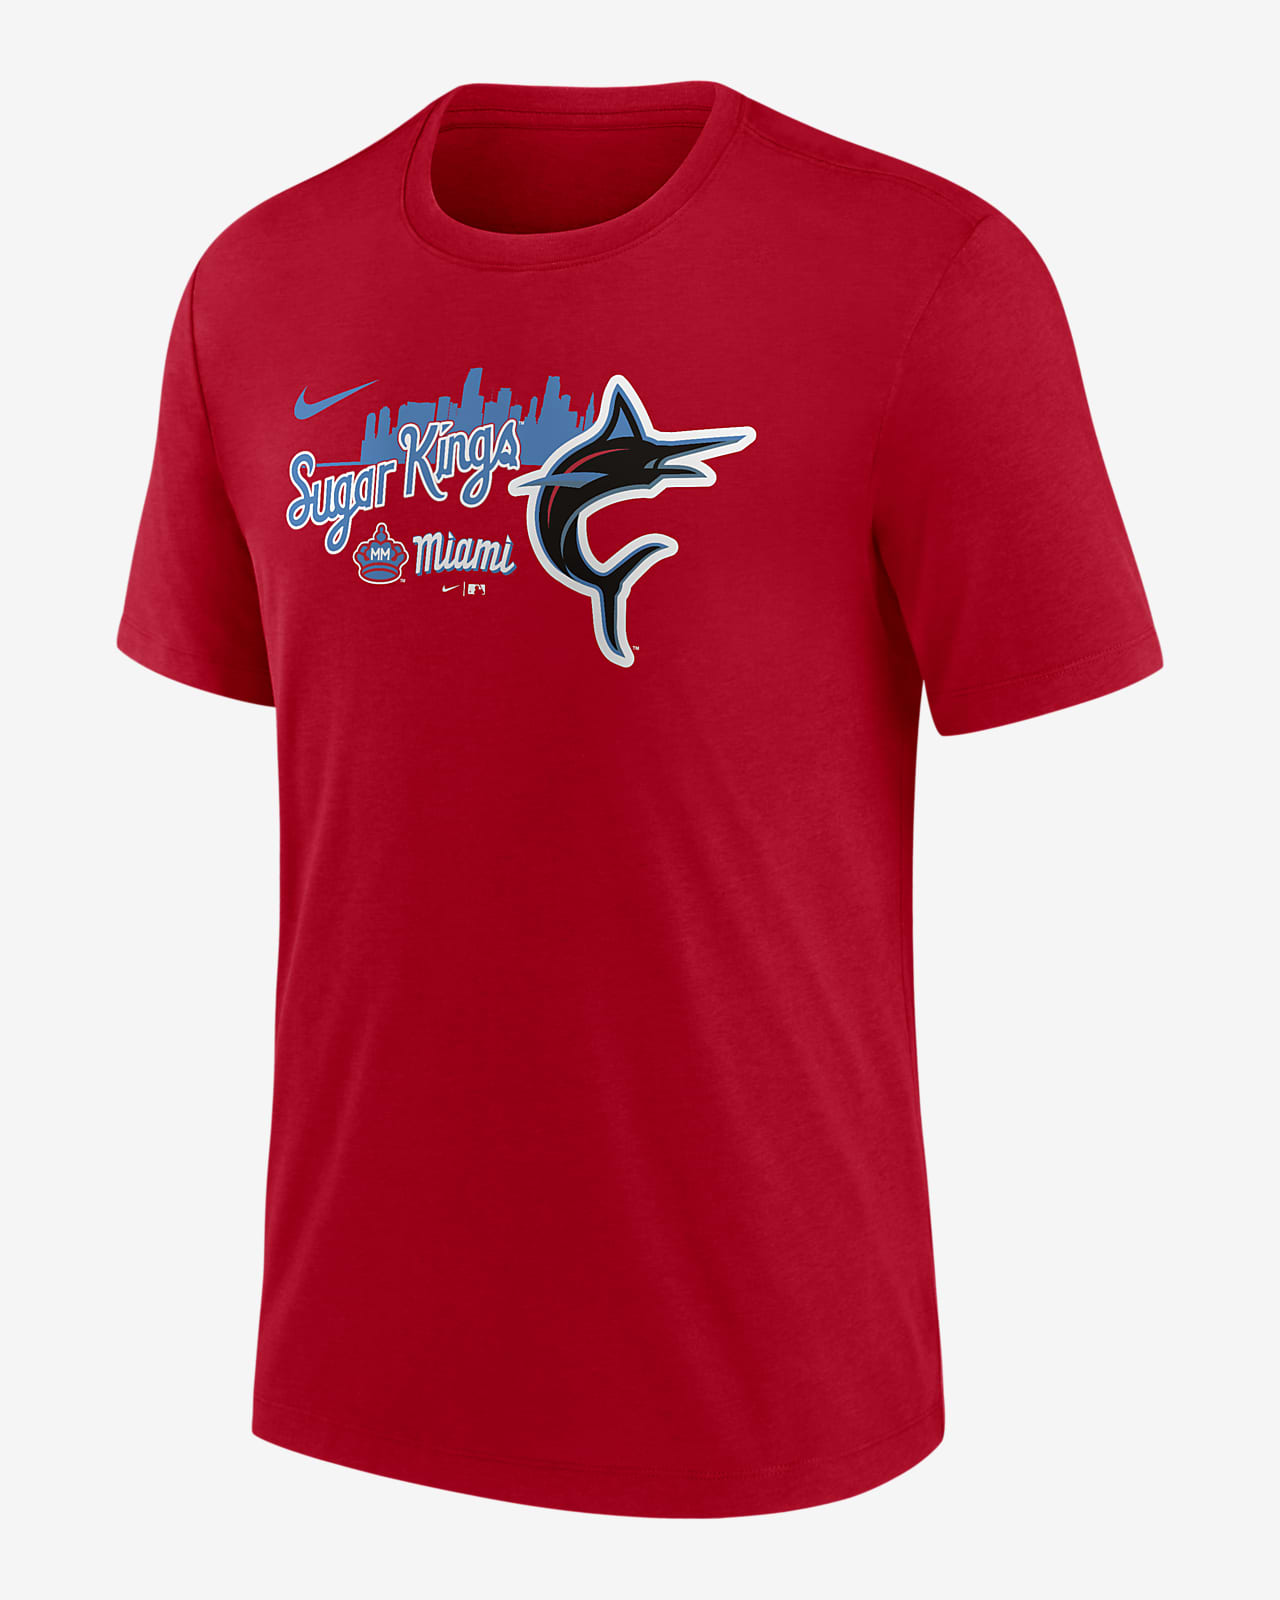 Nike City Connect (MLB Miami Marlins) Men's T-Shirt.